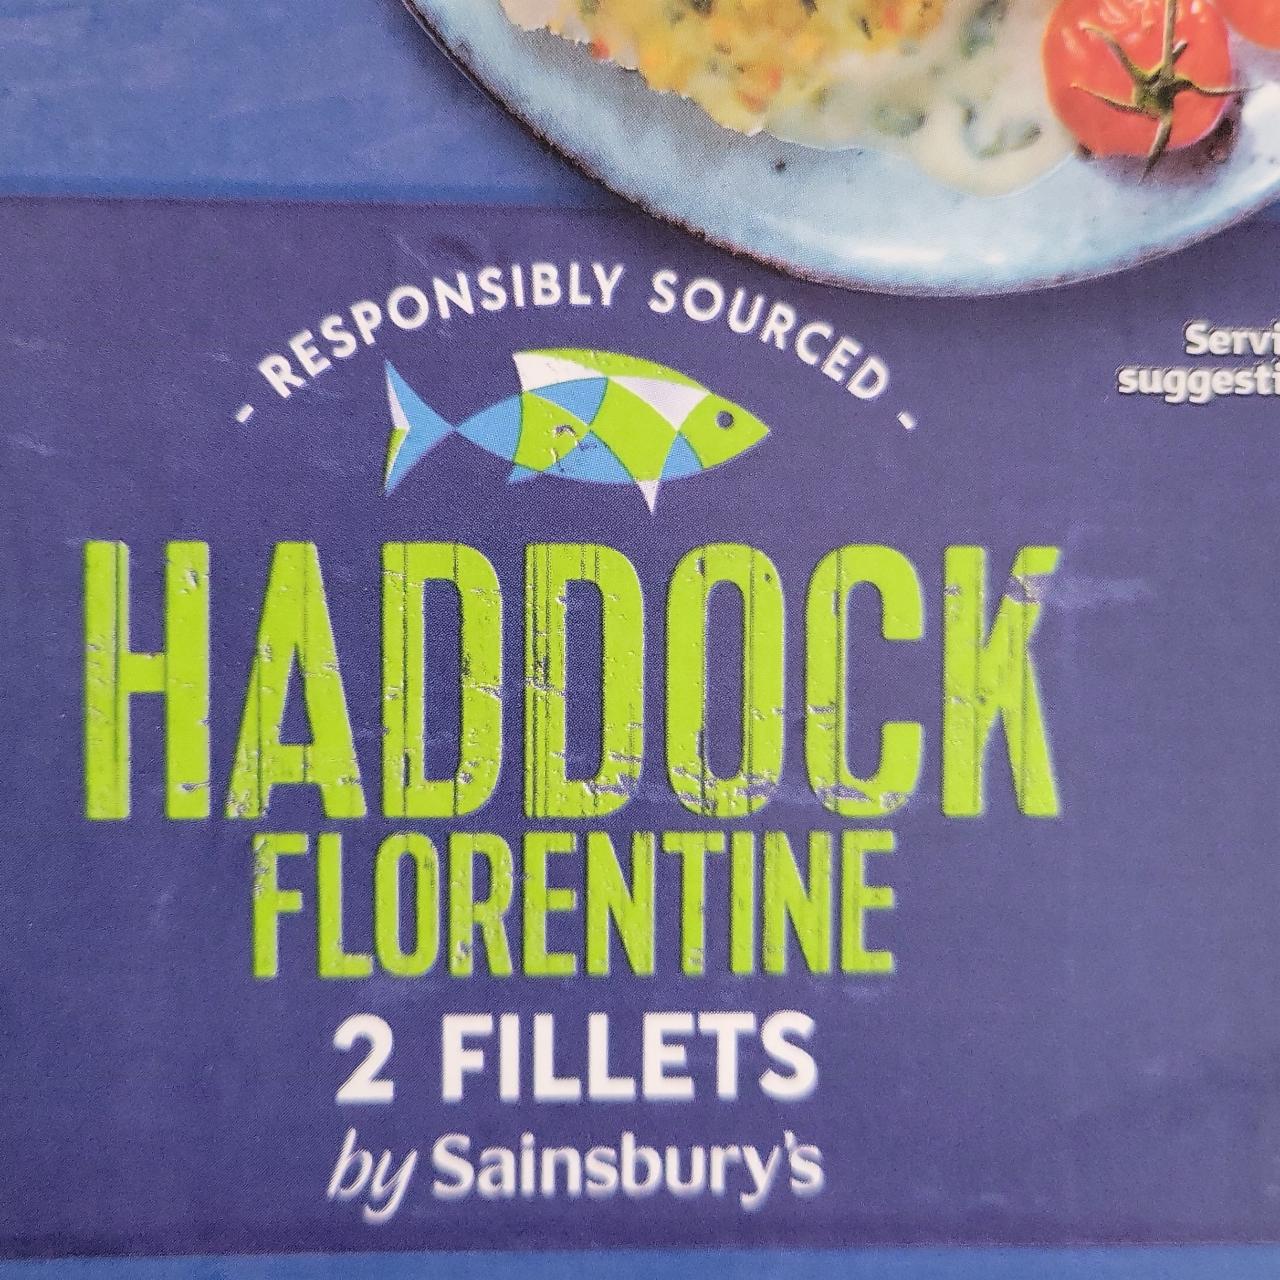 Fotografie - Haddock Florentine by Sainsbury's